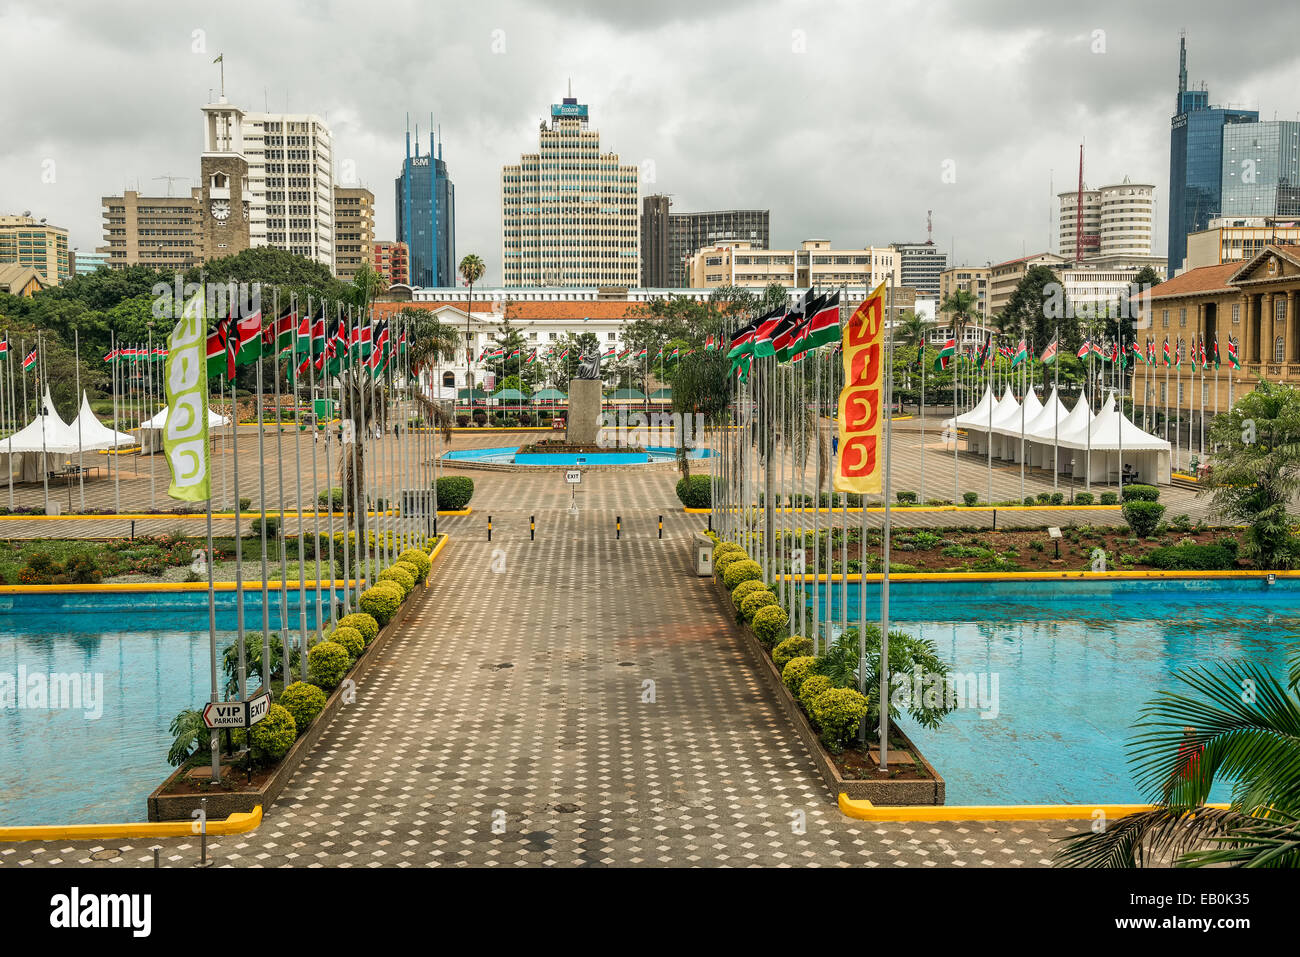 Courtyard surrounding the Jomo Kenyatta statue in front of the Kenyatta International Conference Centre in Nairobi Stock Photo